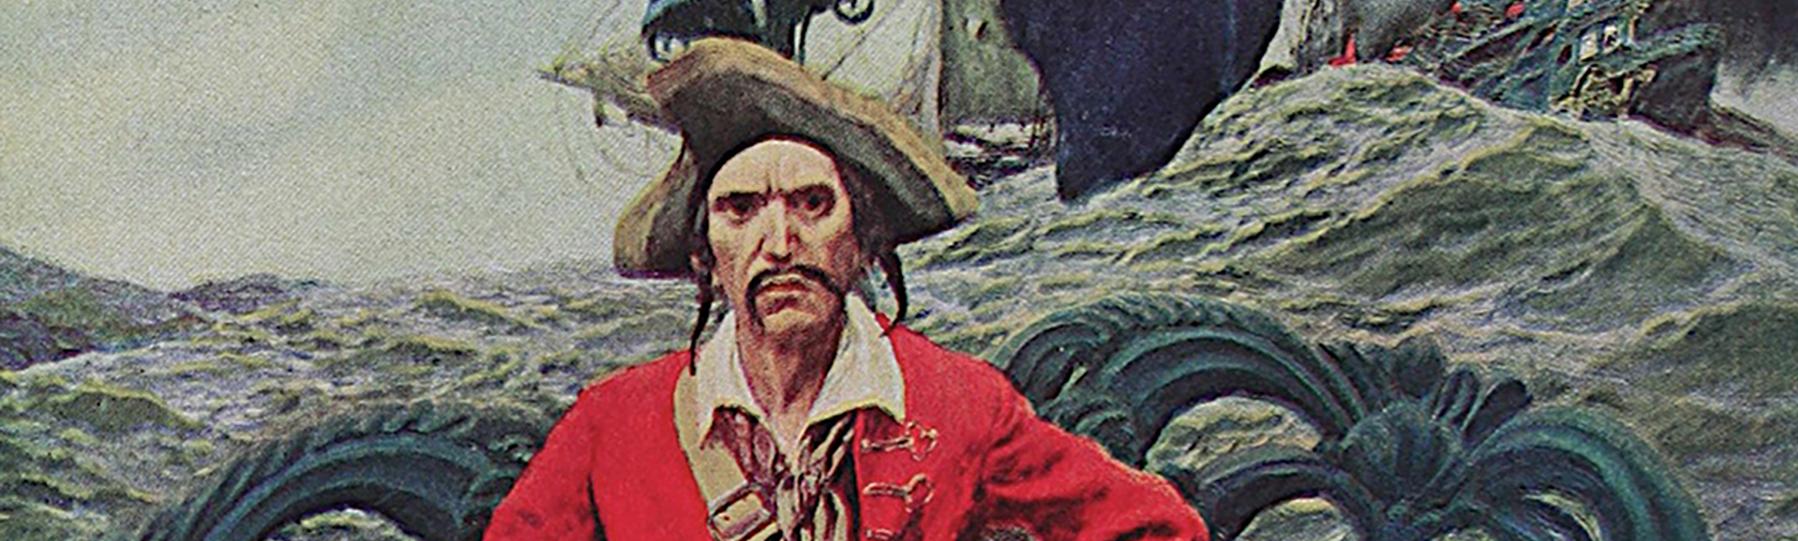 Pirates Privateers and Buccaneers Traveling Exhibit